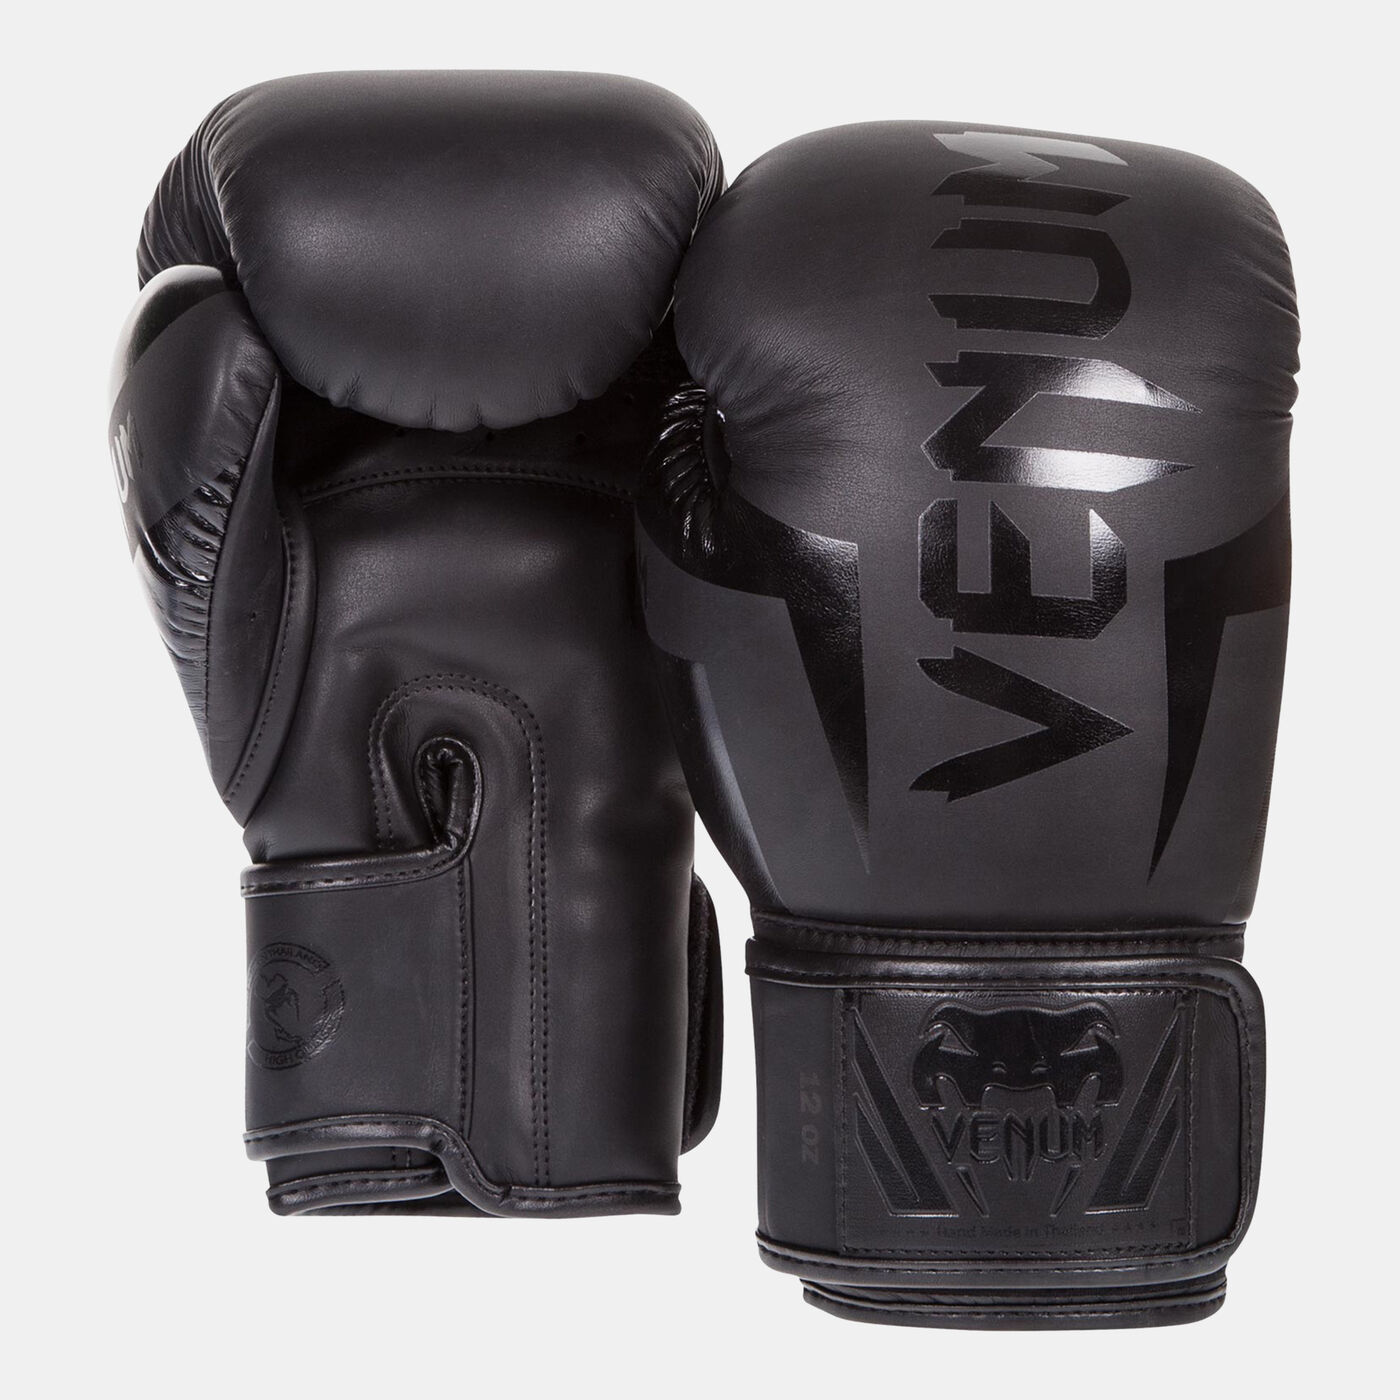 Elite Boxing Gloves (12 oz)